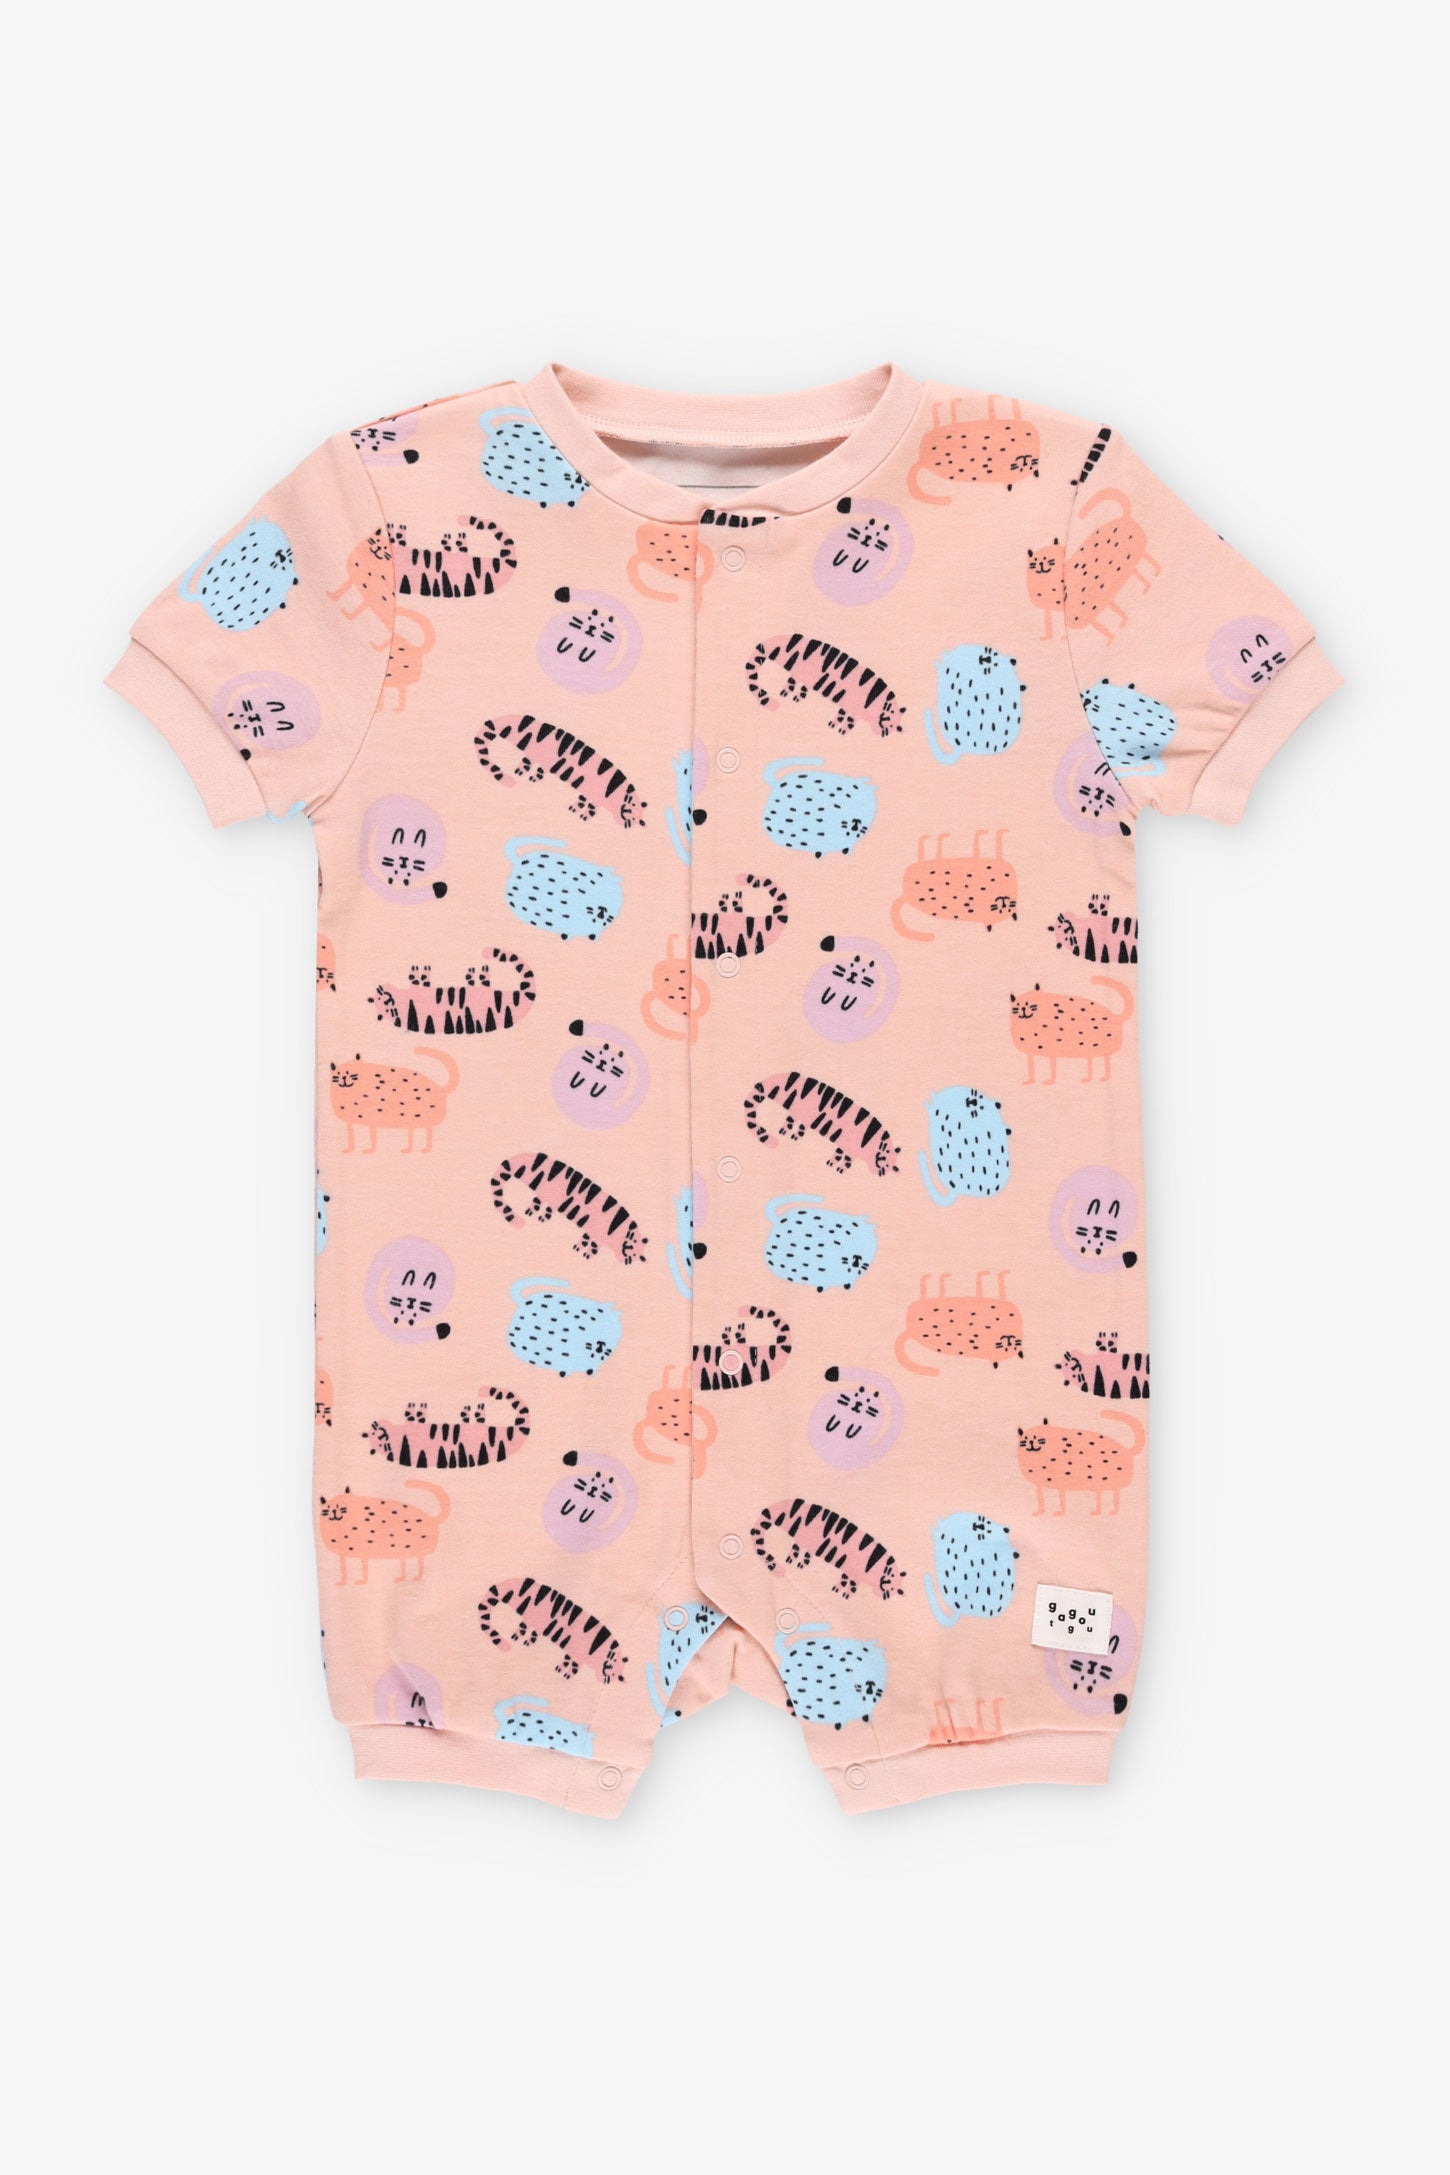 Pyjama 1-pièce combinaison coton bio, 2T-3T - Bébé fille && ROSE MULTI